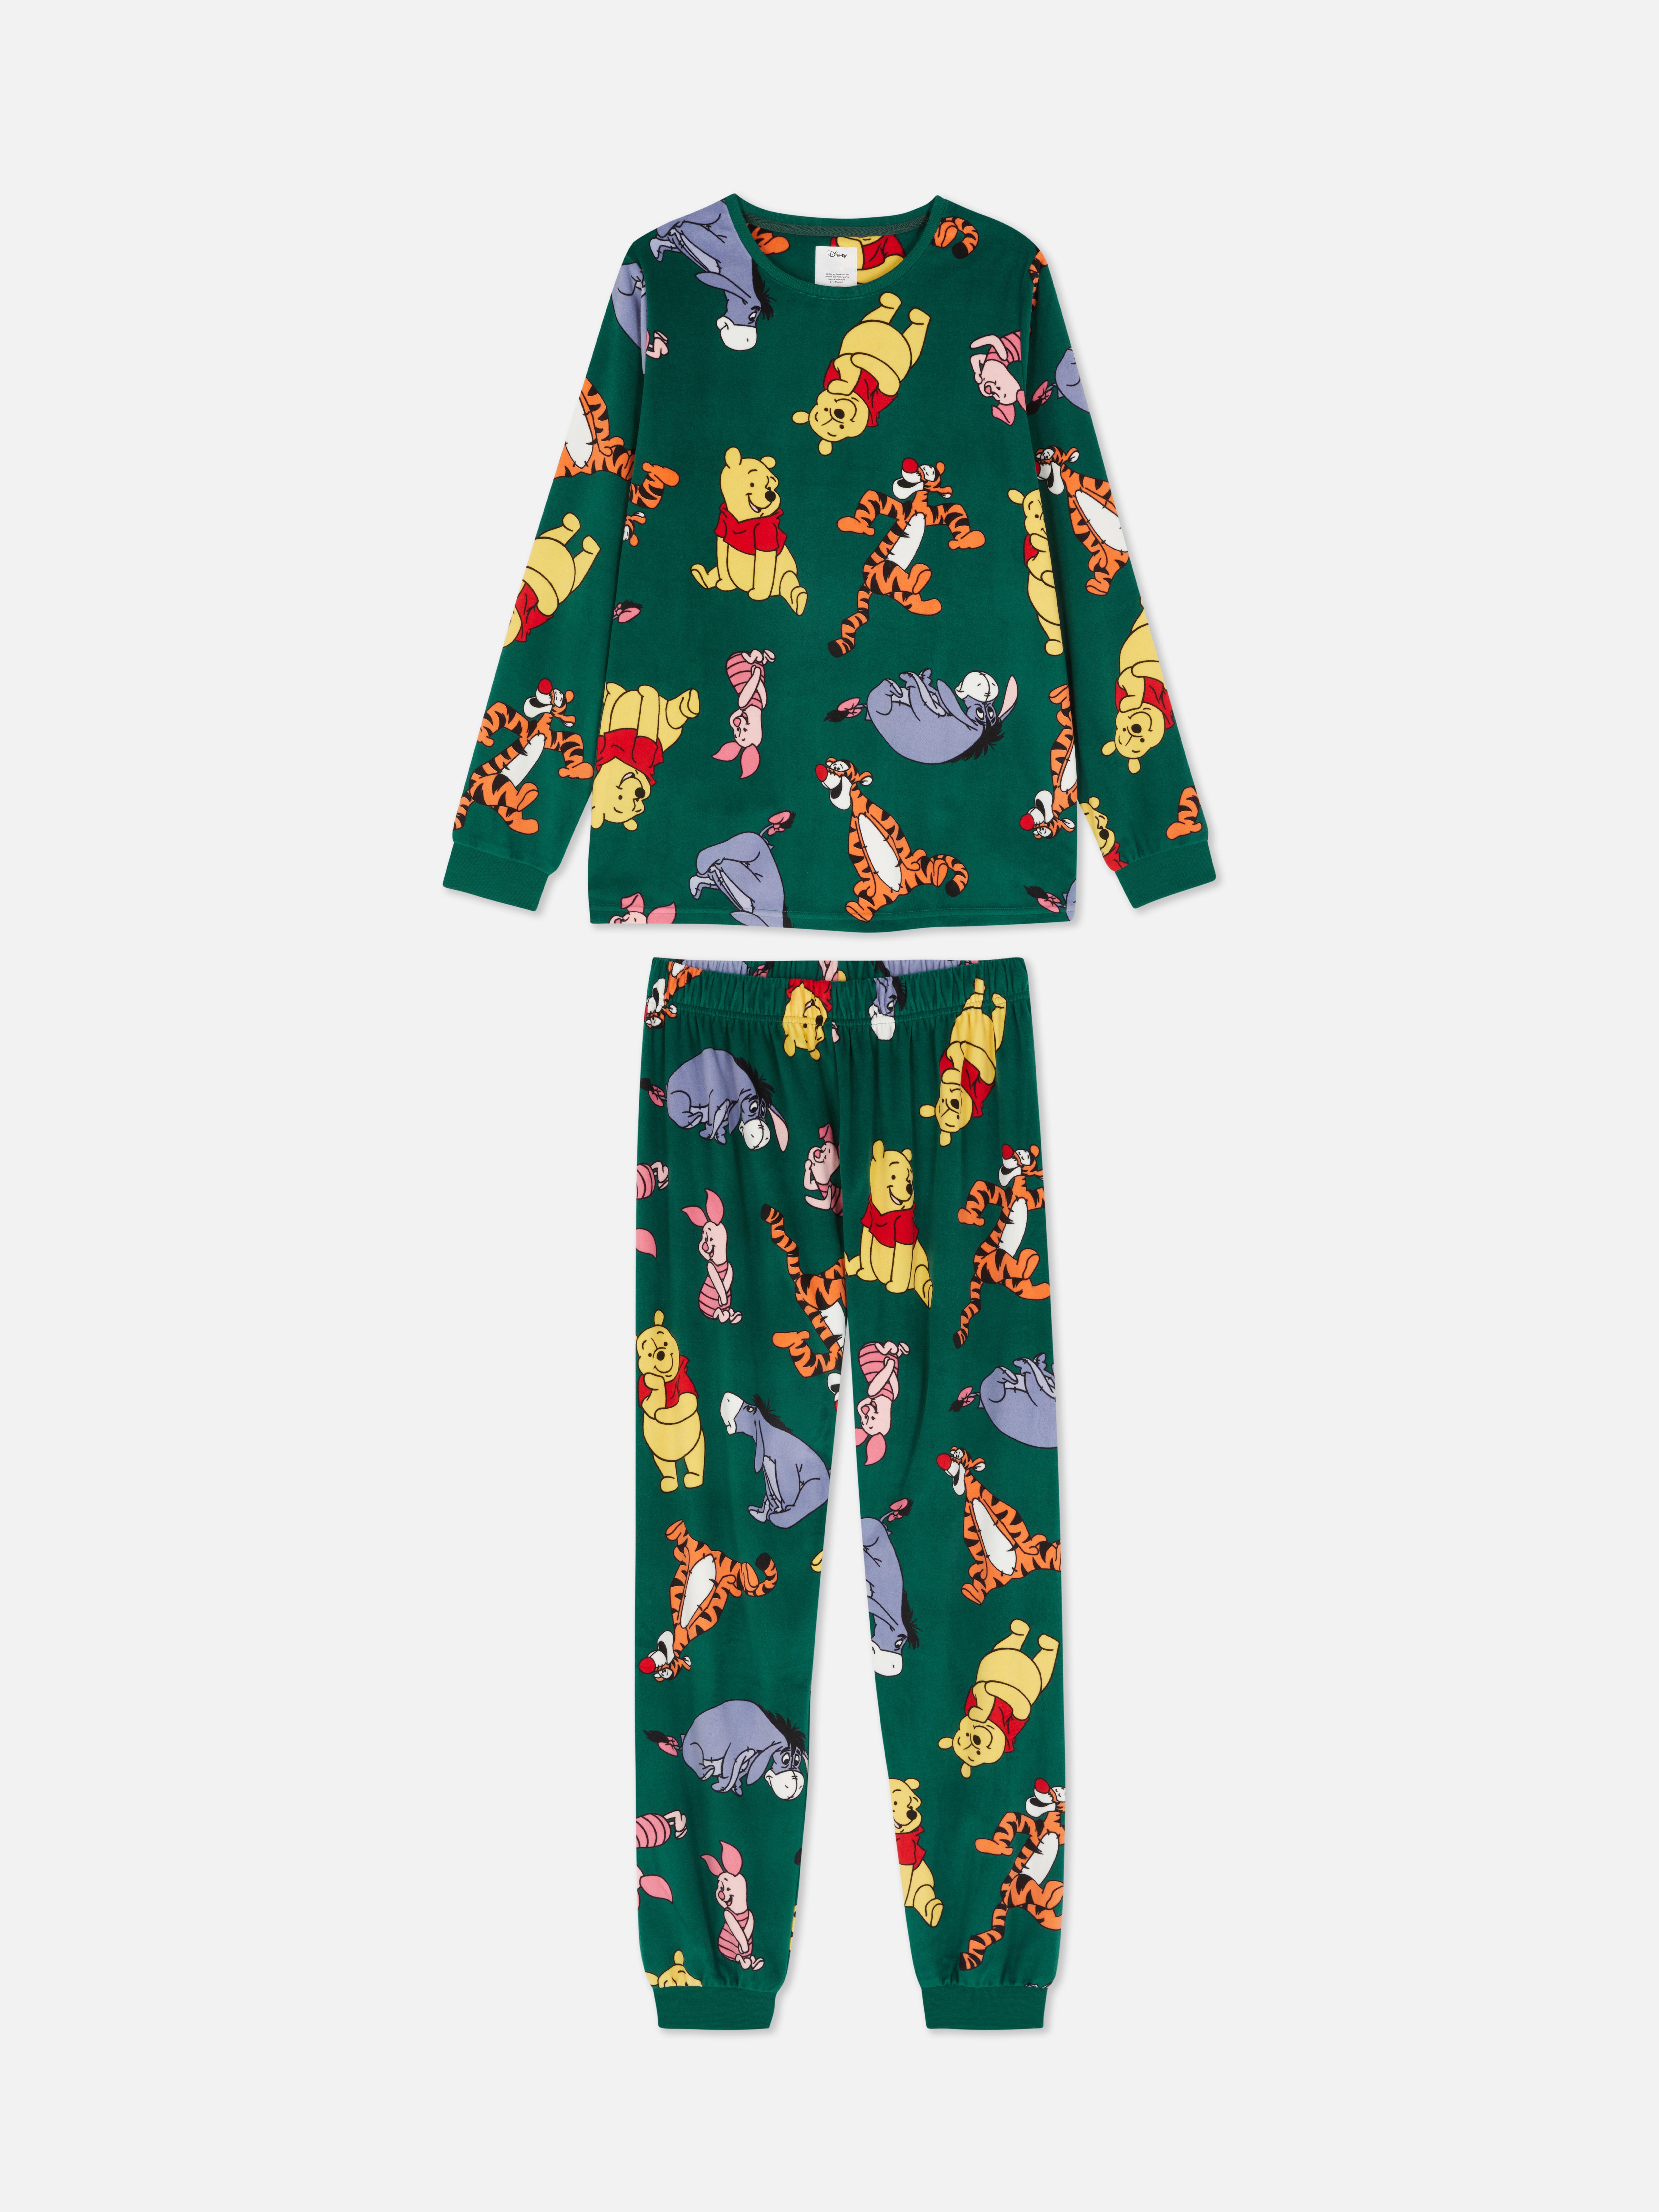 Pyjama primark femme Disney disponible.